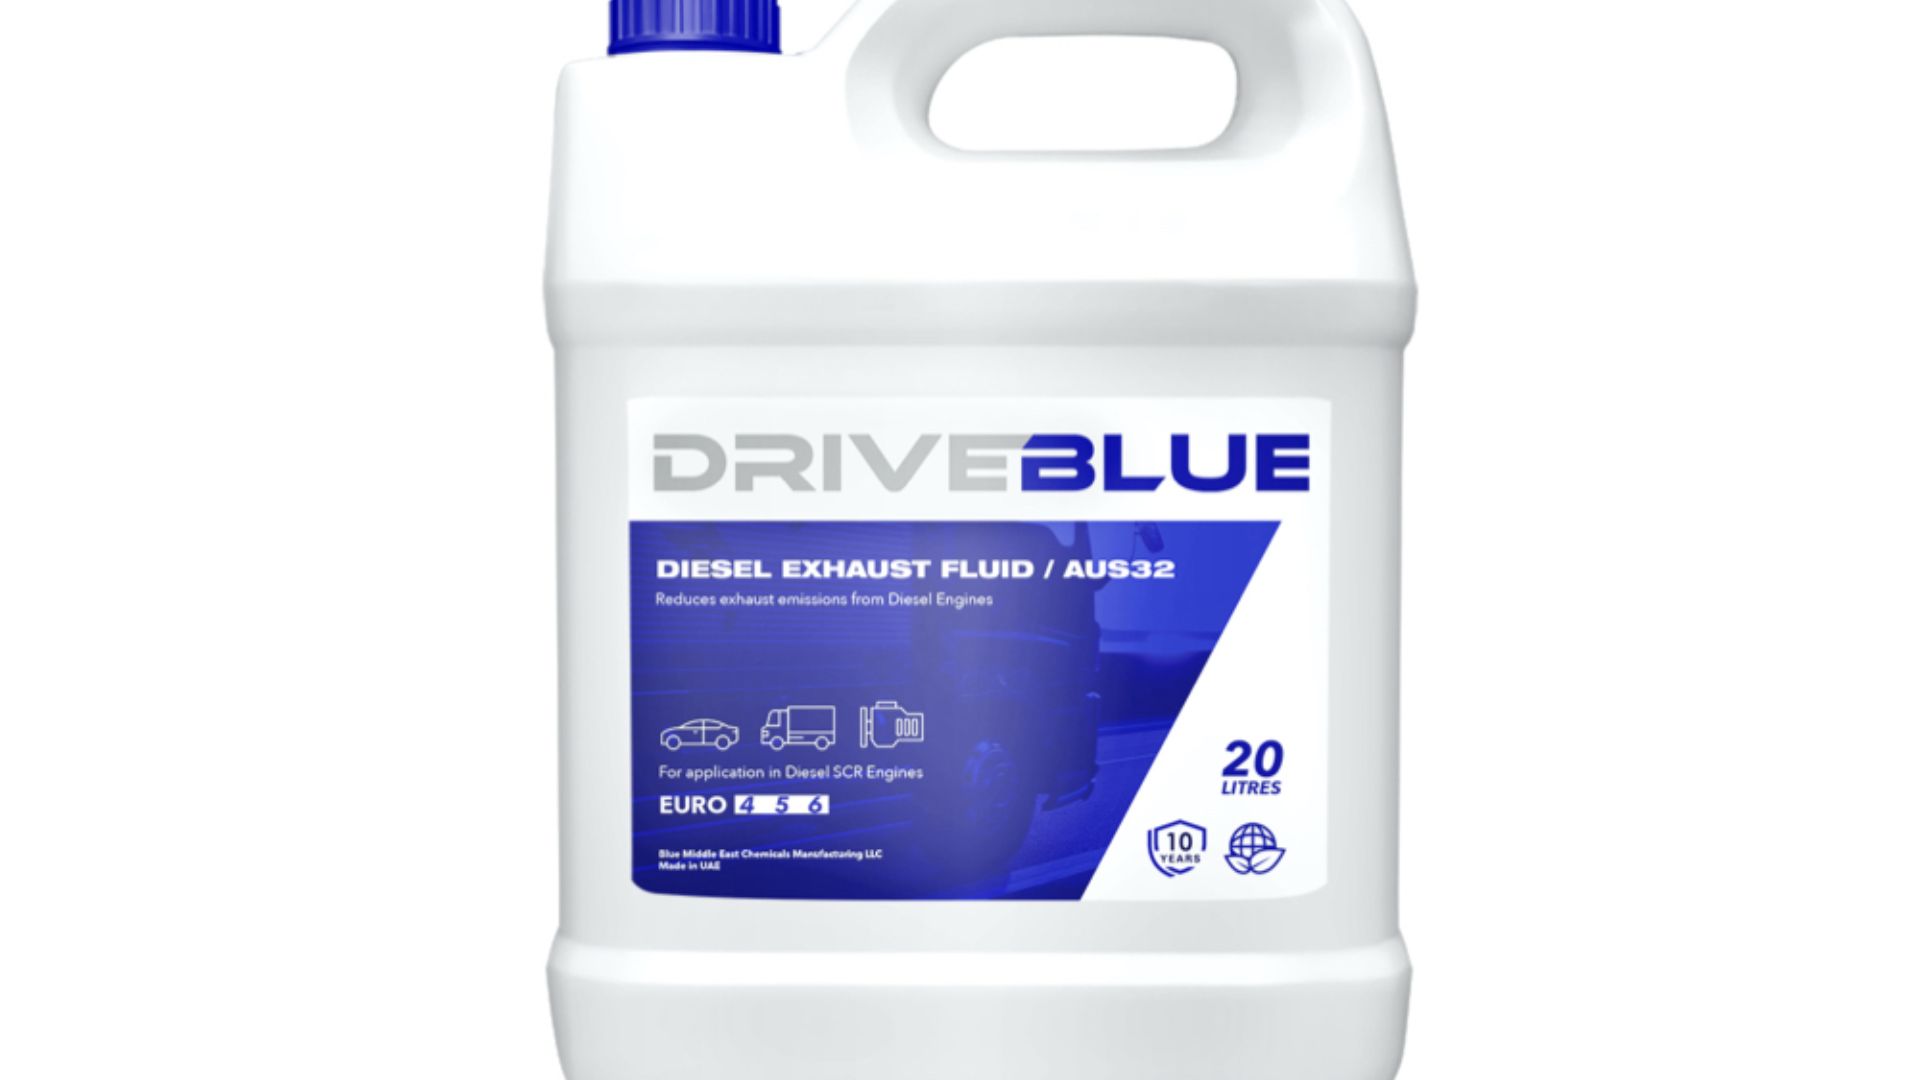 Understanding Blue Additive for Diesel Engines
